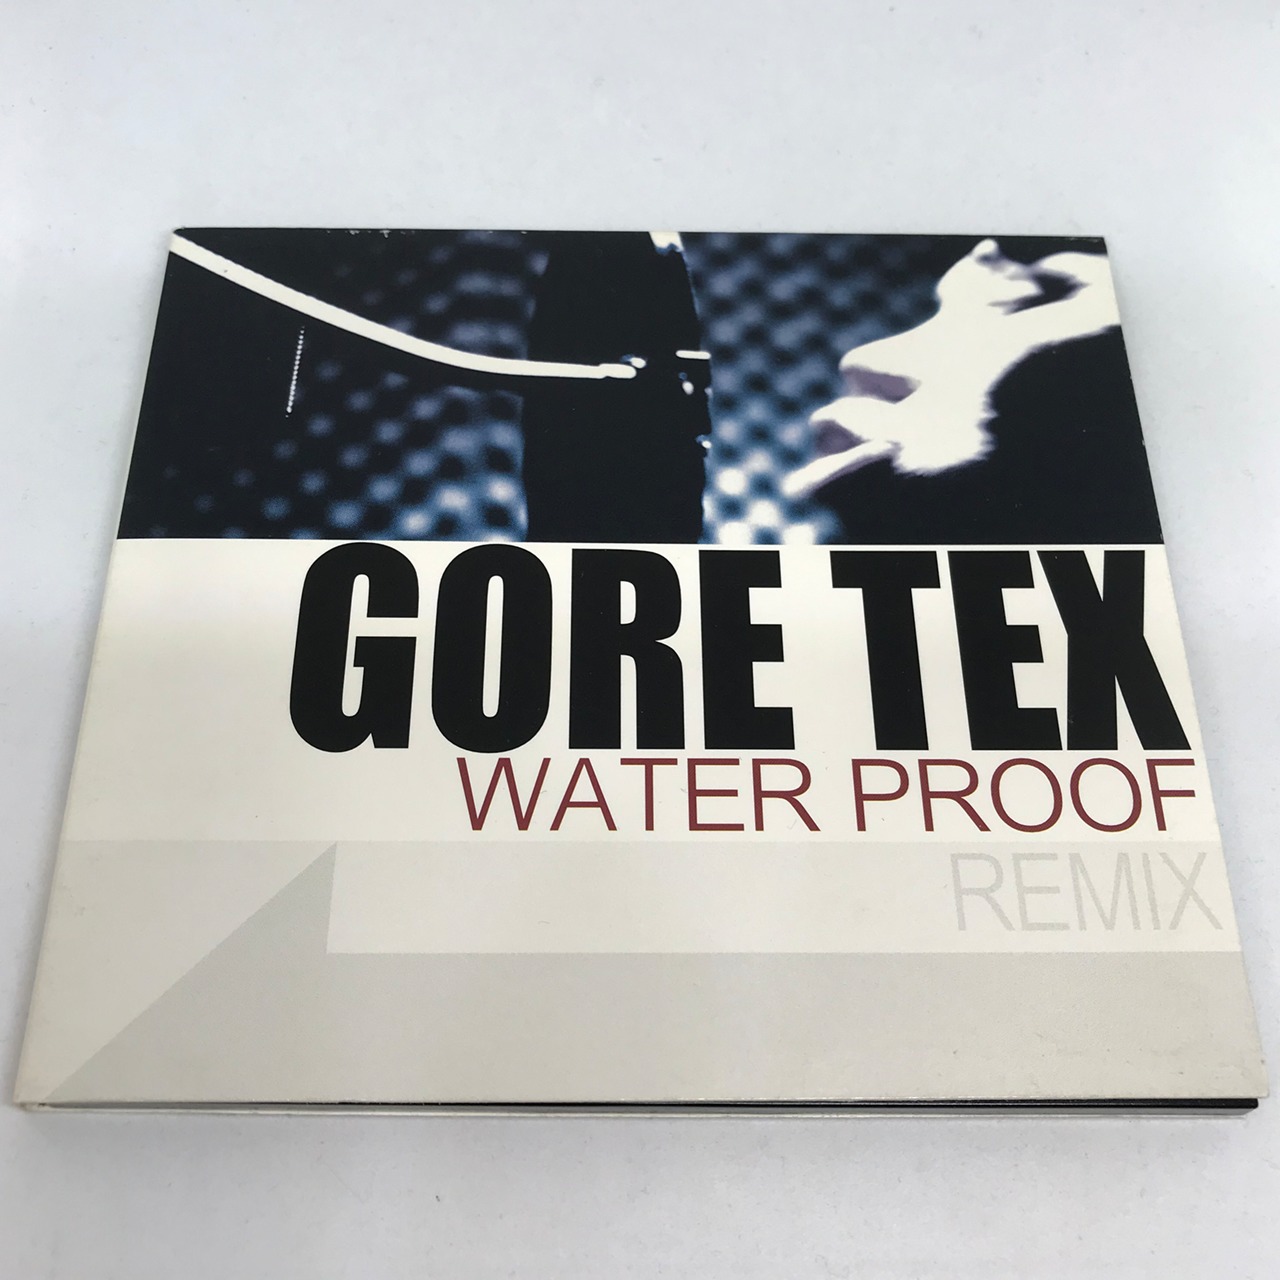 GORE-TEX / Water Proof Remix